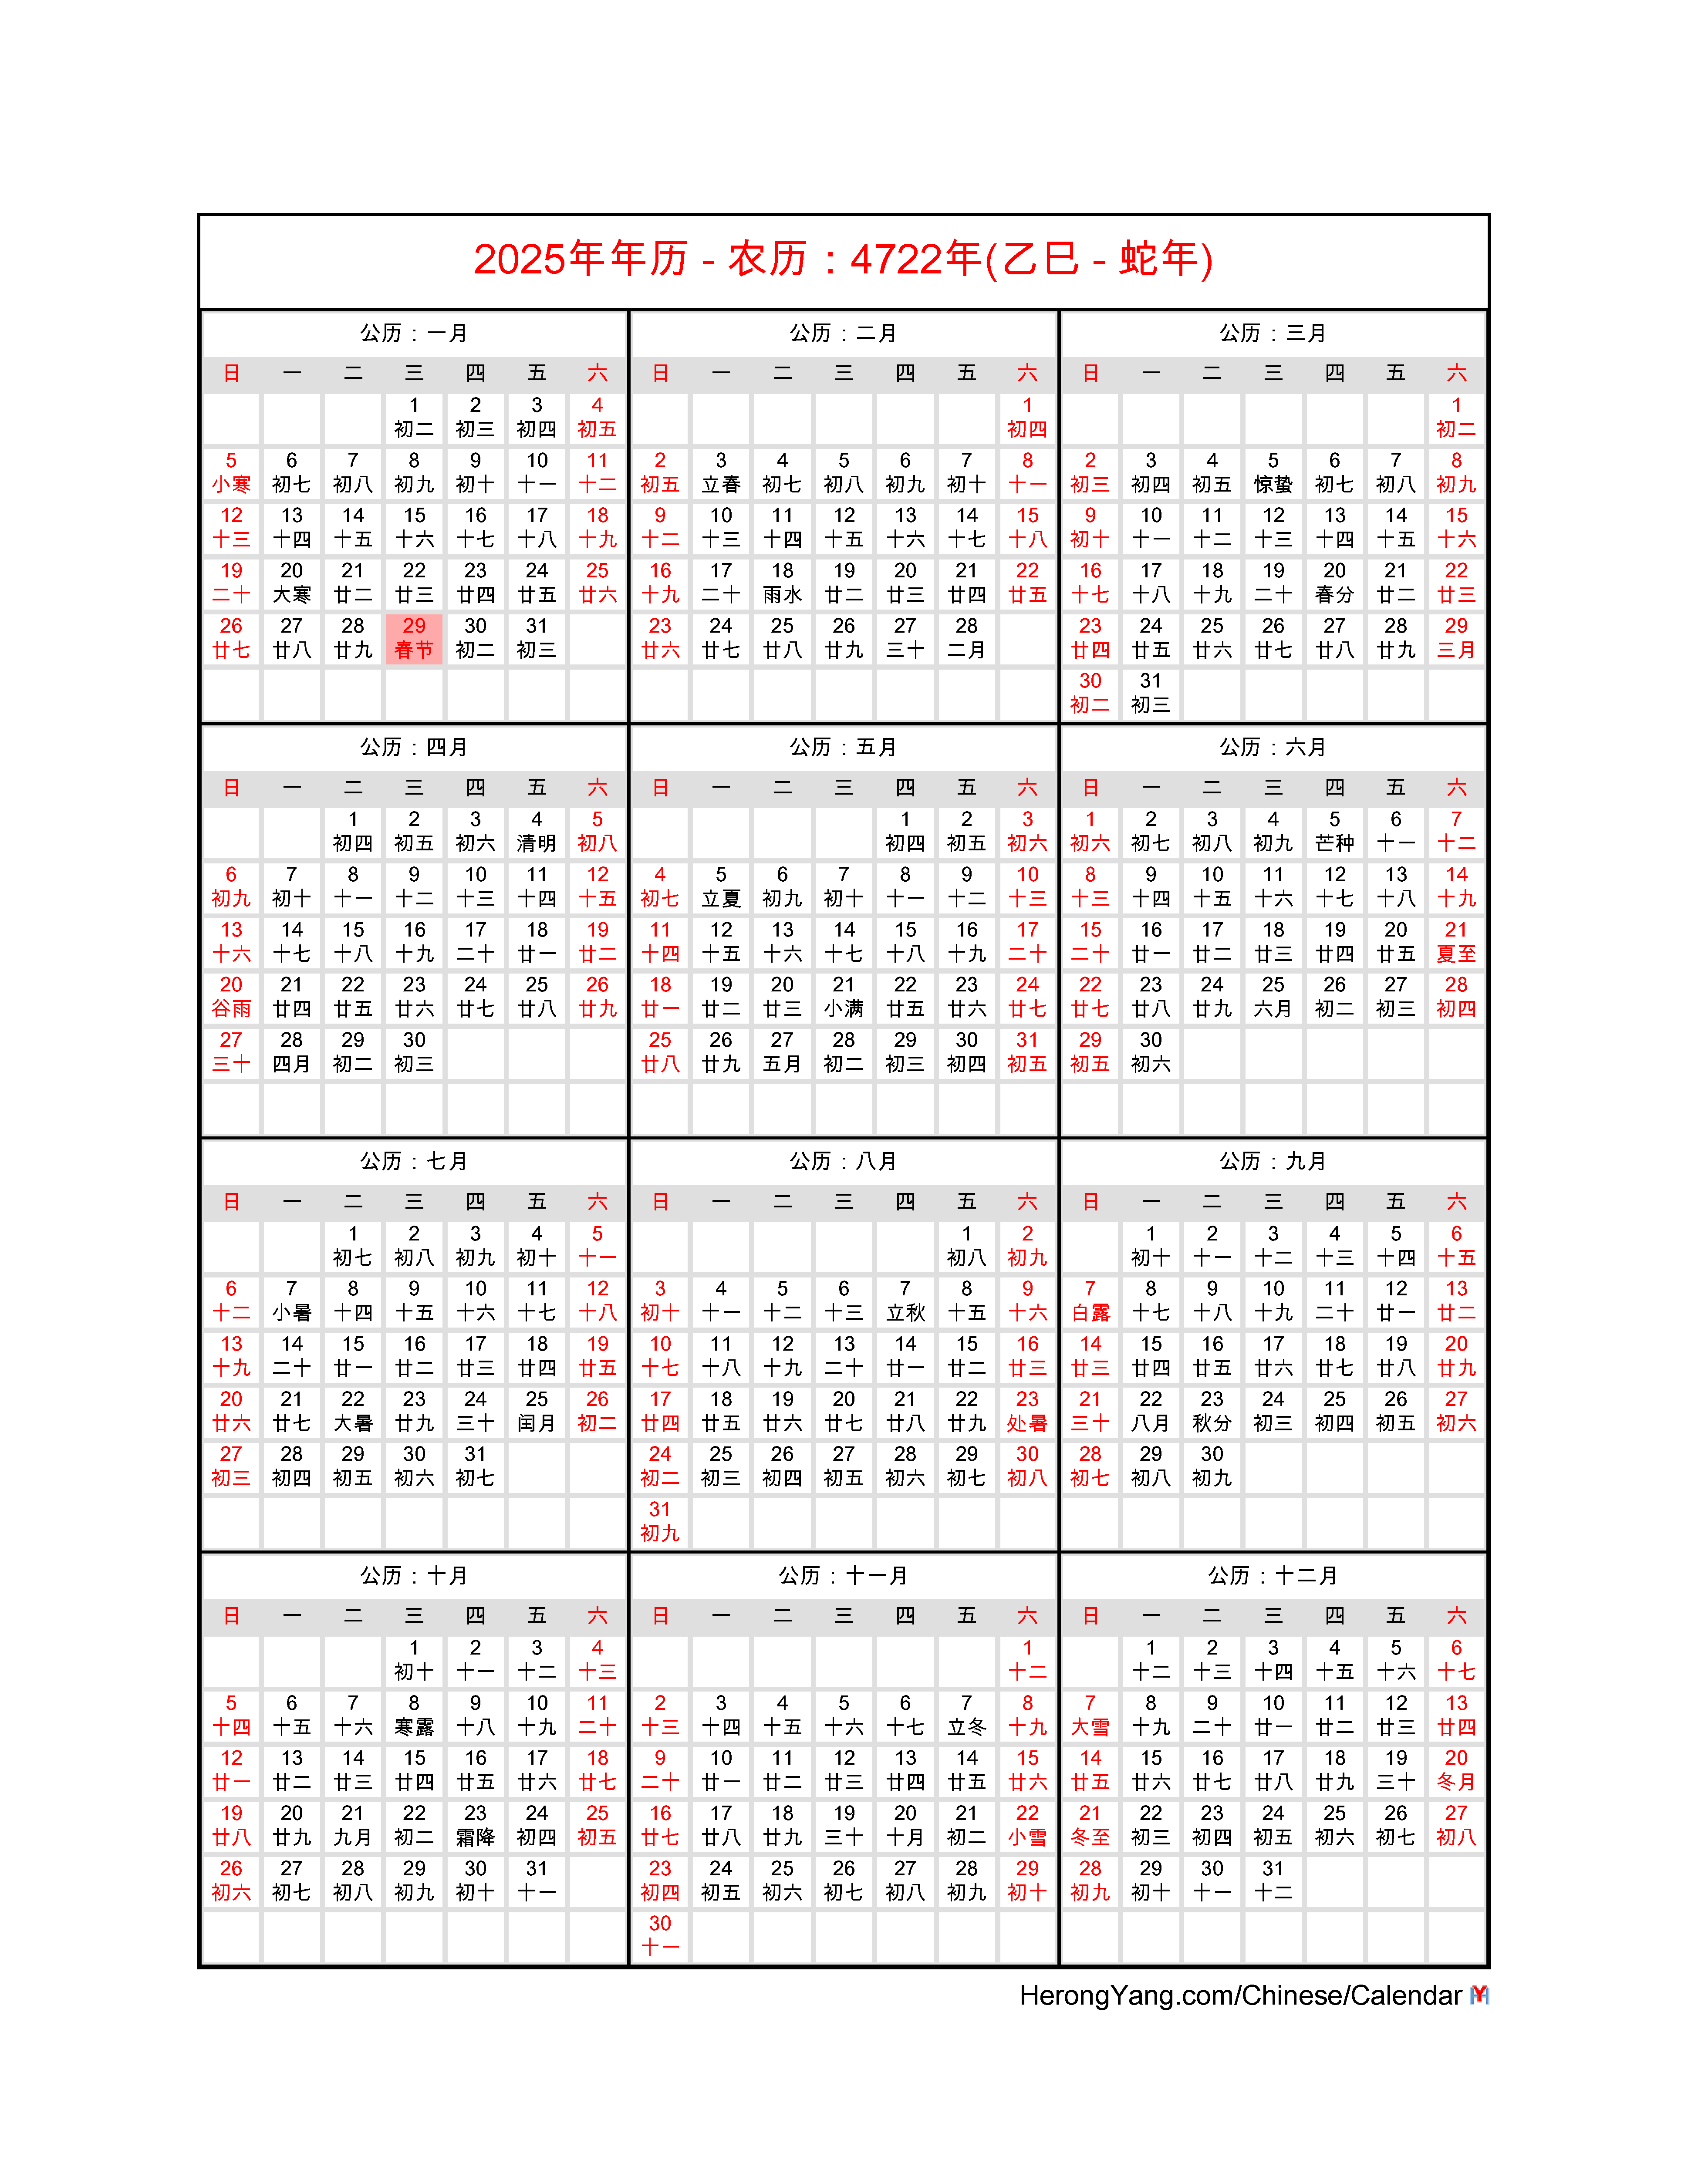 2025 Lunar Calendar New Year Pictures Free - Ivett Letisha